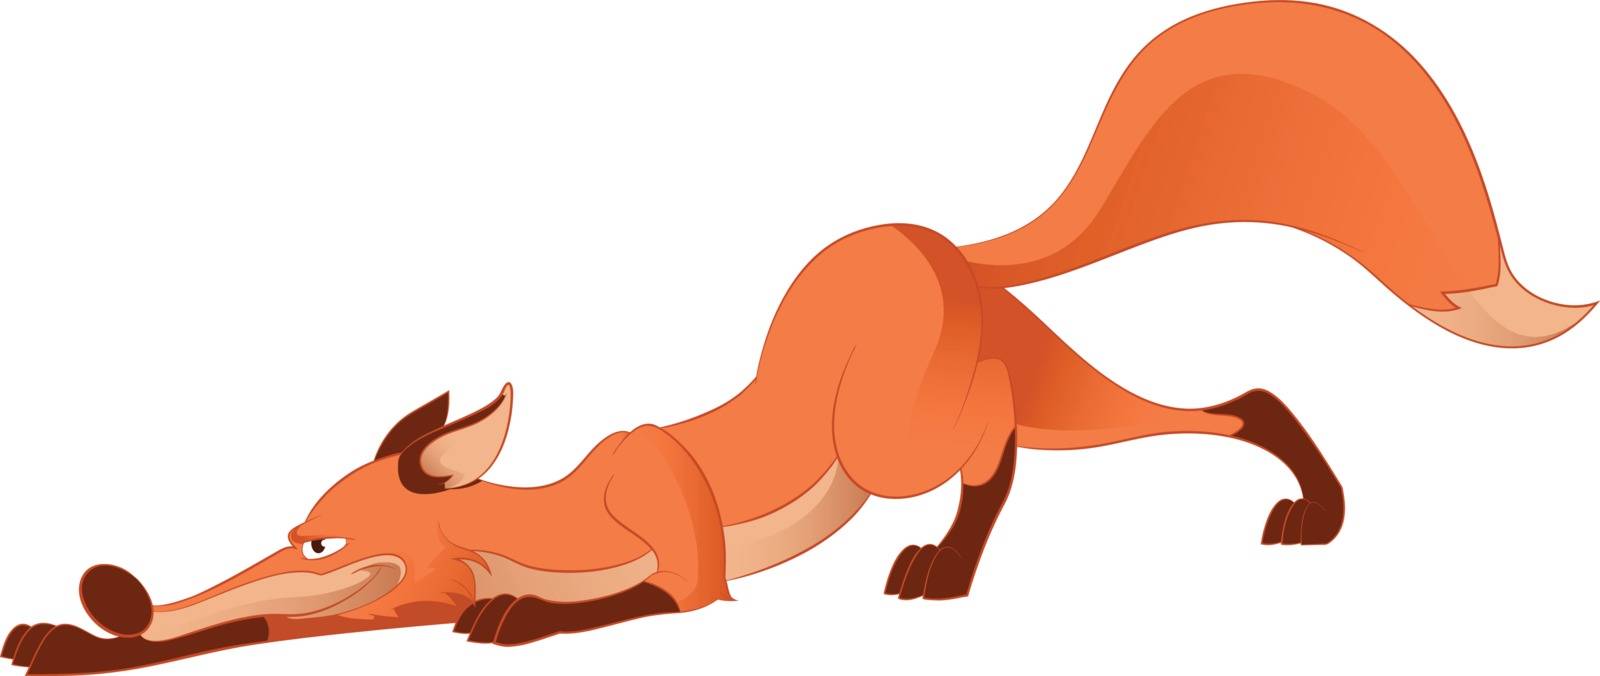 Vector image of a Cartoon sly fox